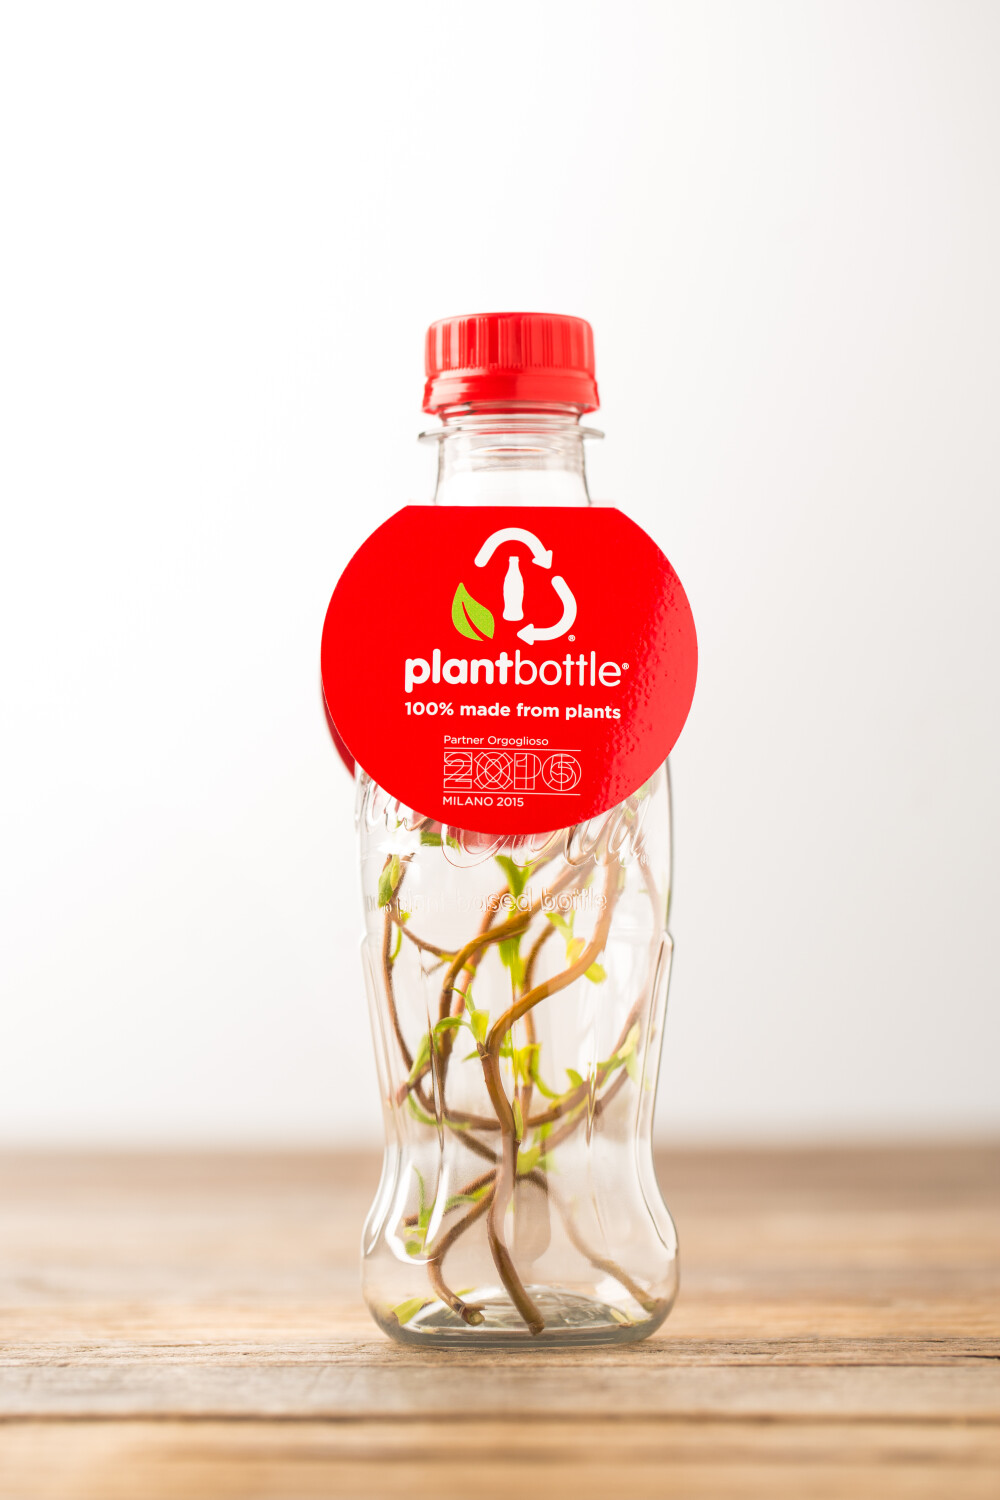 (P) Asa arata prima sticla Coca-Cola facuta exclusiv din plante. Cum a evoluat sticla simbolica in ultimii 100 ani - Imaginea 2